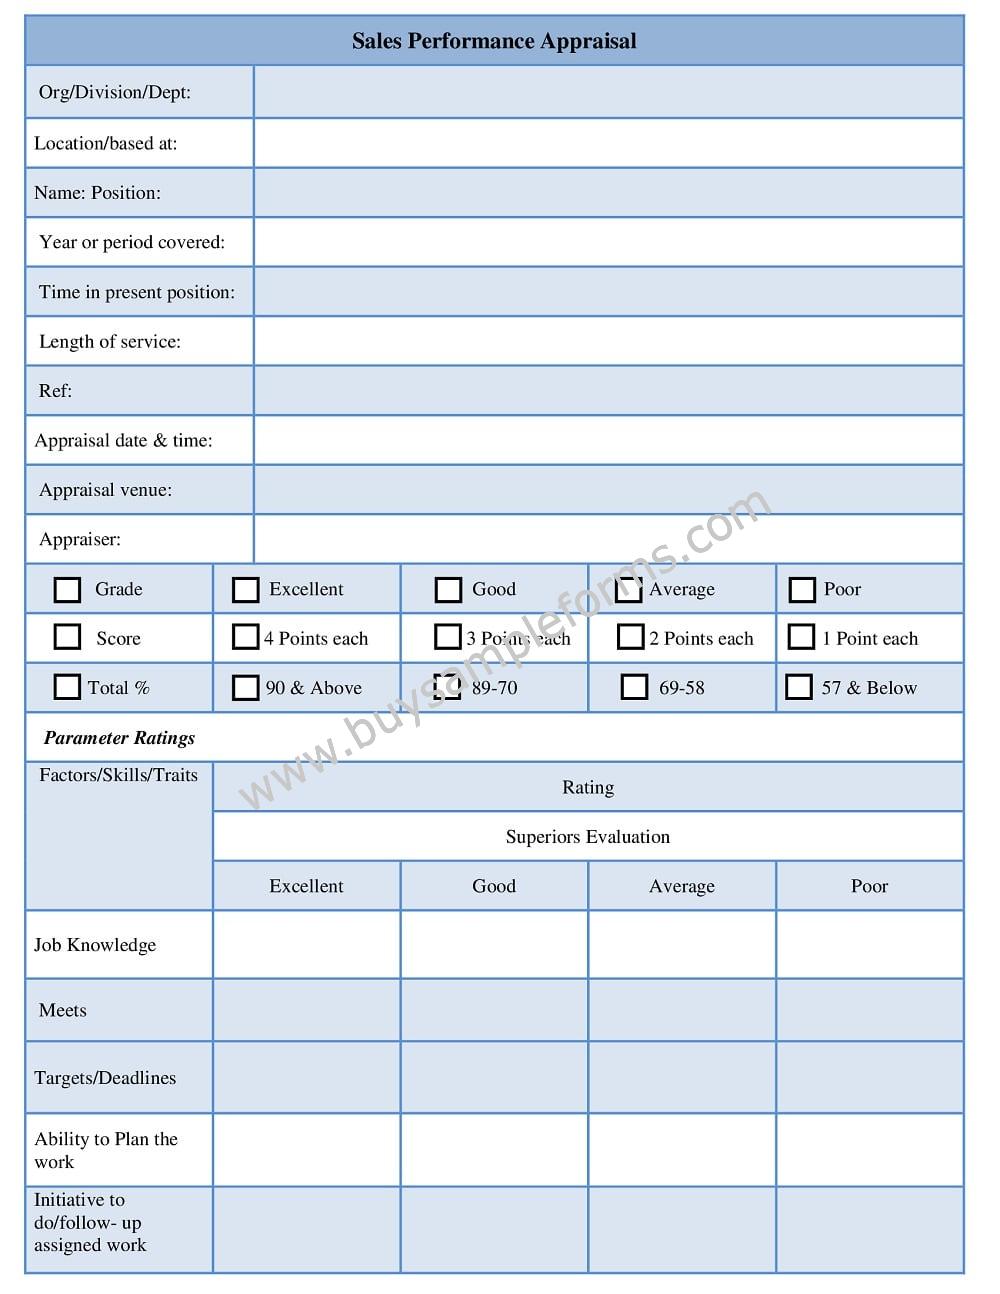 Sales Performance Appraisal Form, sales performance template, evaluation form